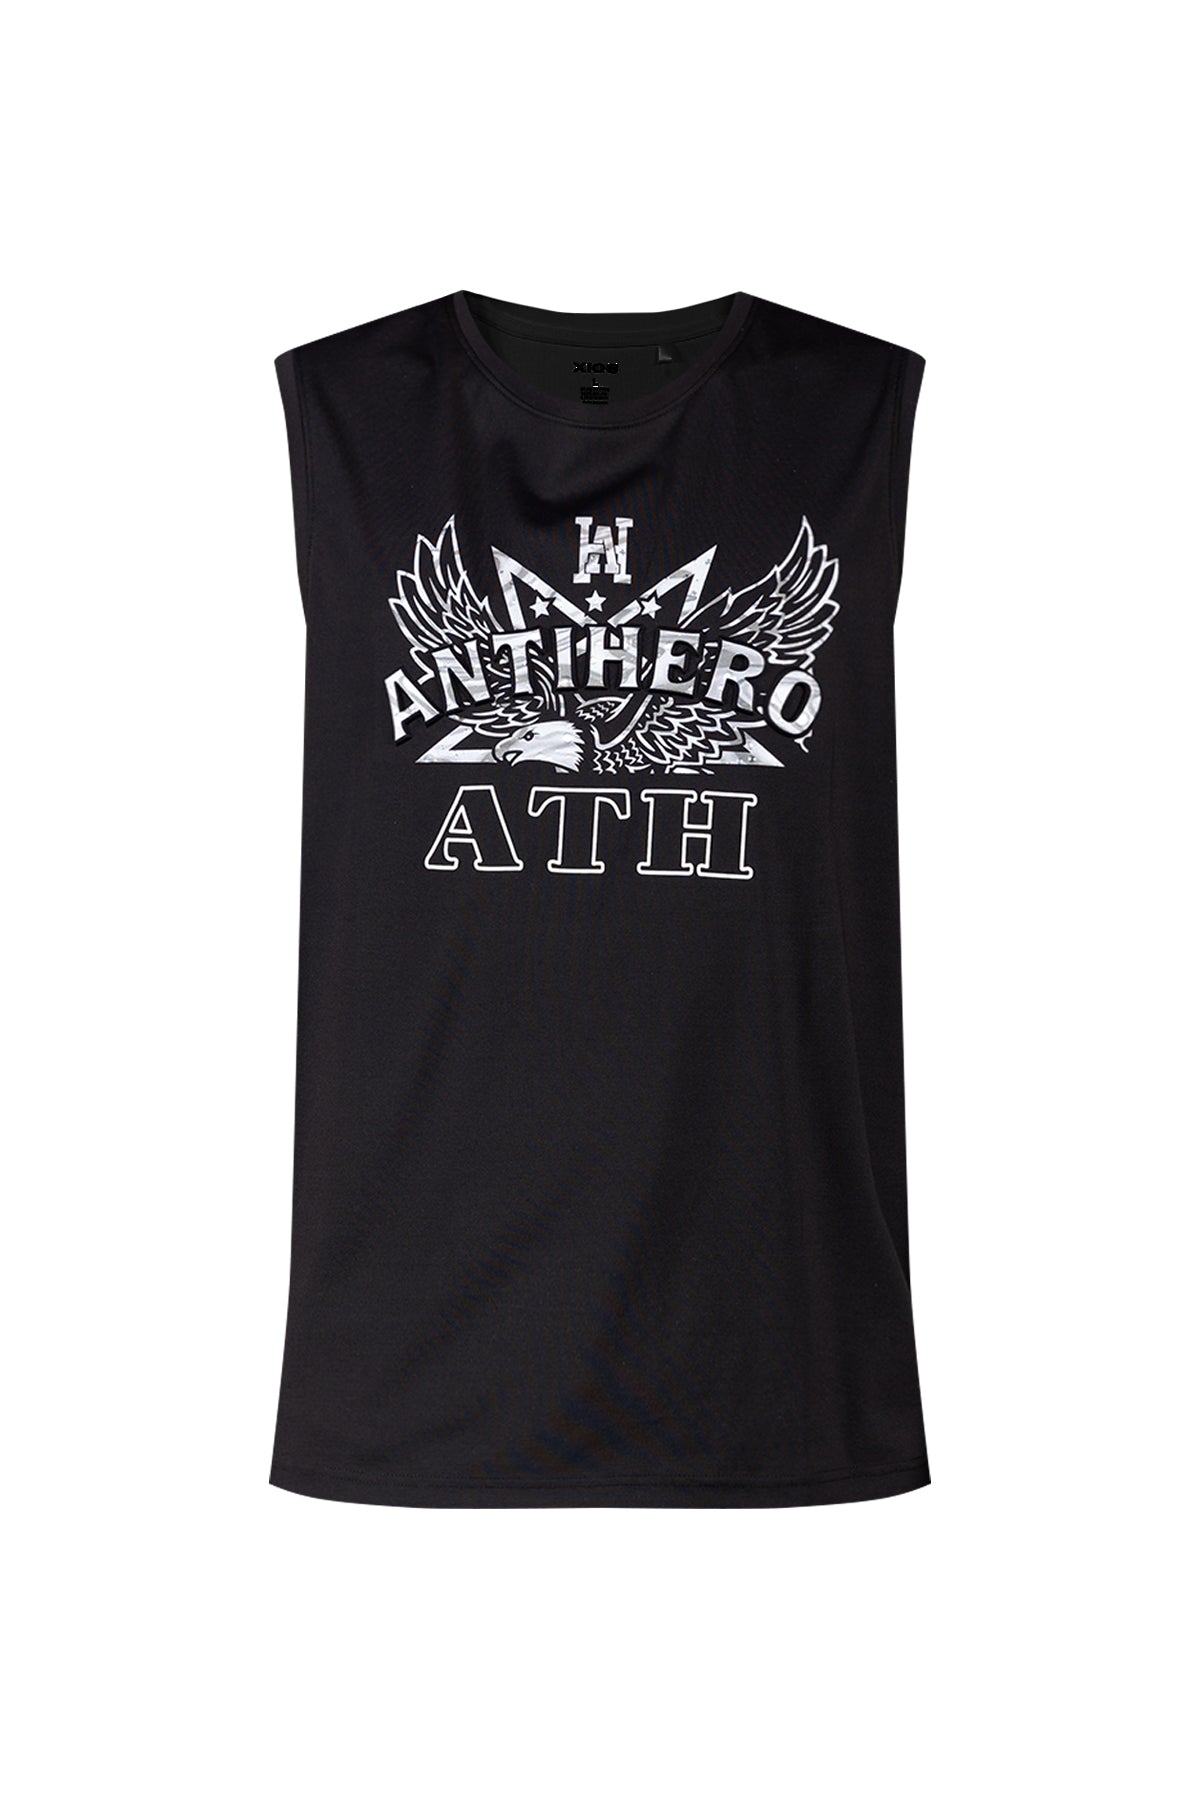 "Antihero" Muscle Shirt - XIOS America